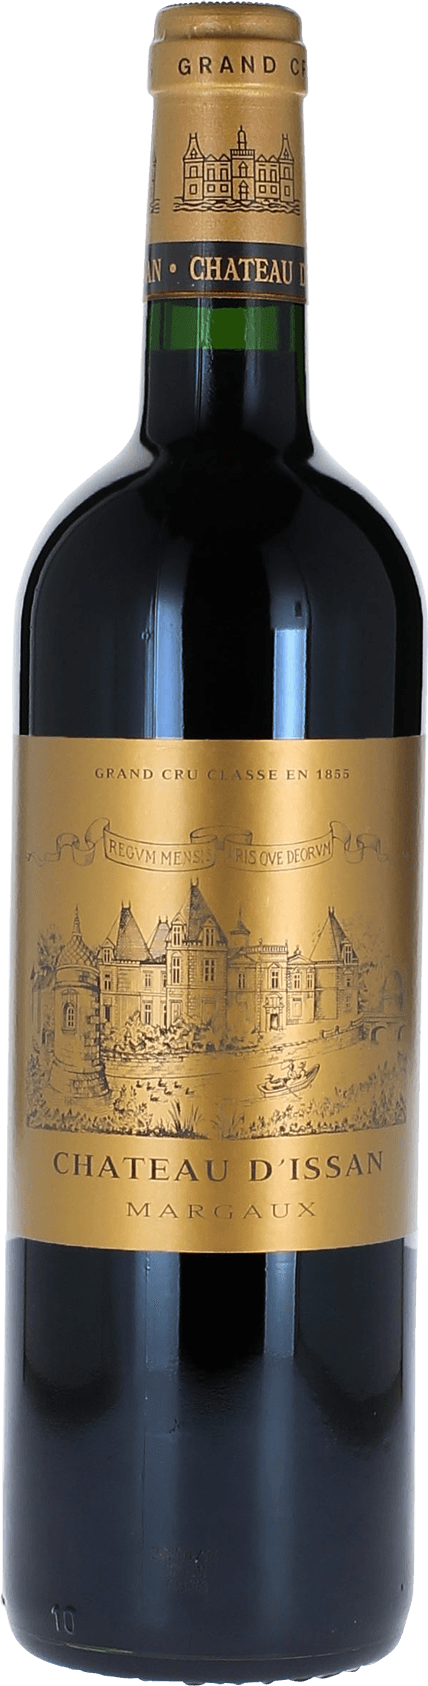 Issan 2017 3me Grand cru class Margaux, Bordeaux rouge